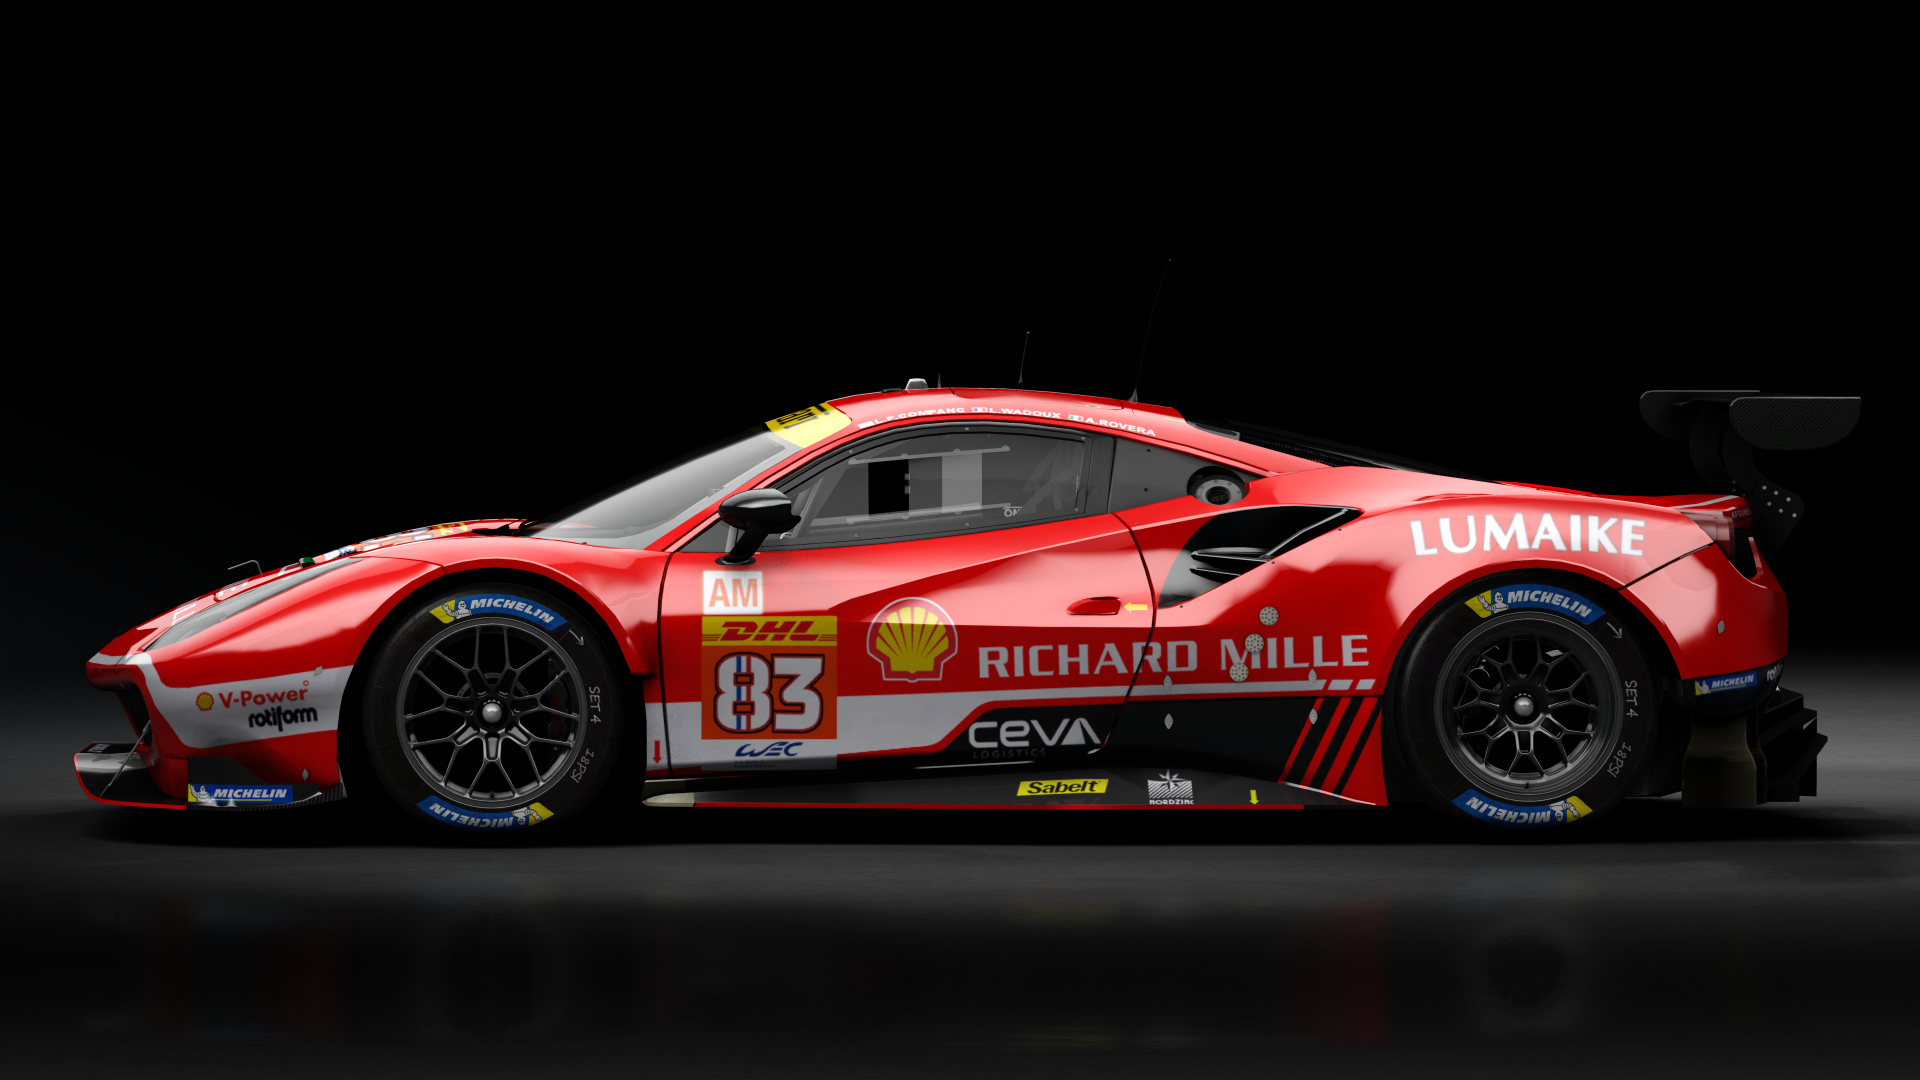 2018 Ferrari 488 GTE Evo [Michelotto], skin 2023 #83 Richard Mille WEC Rd1 Sebring